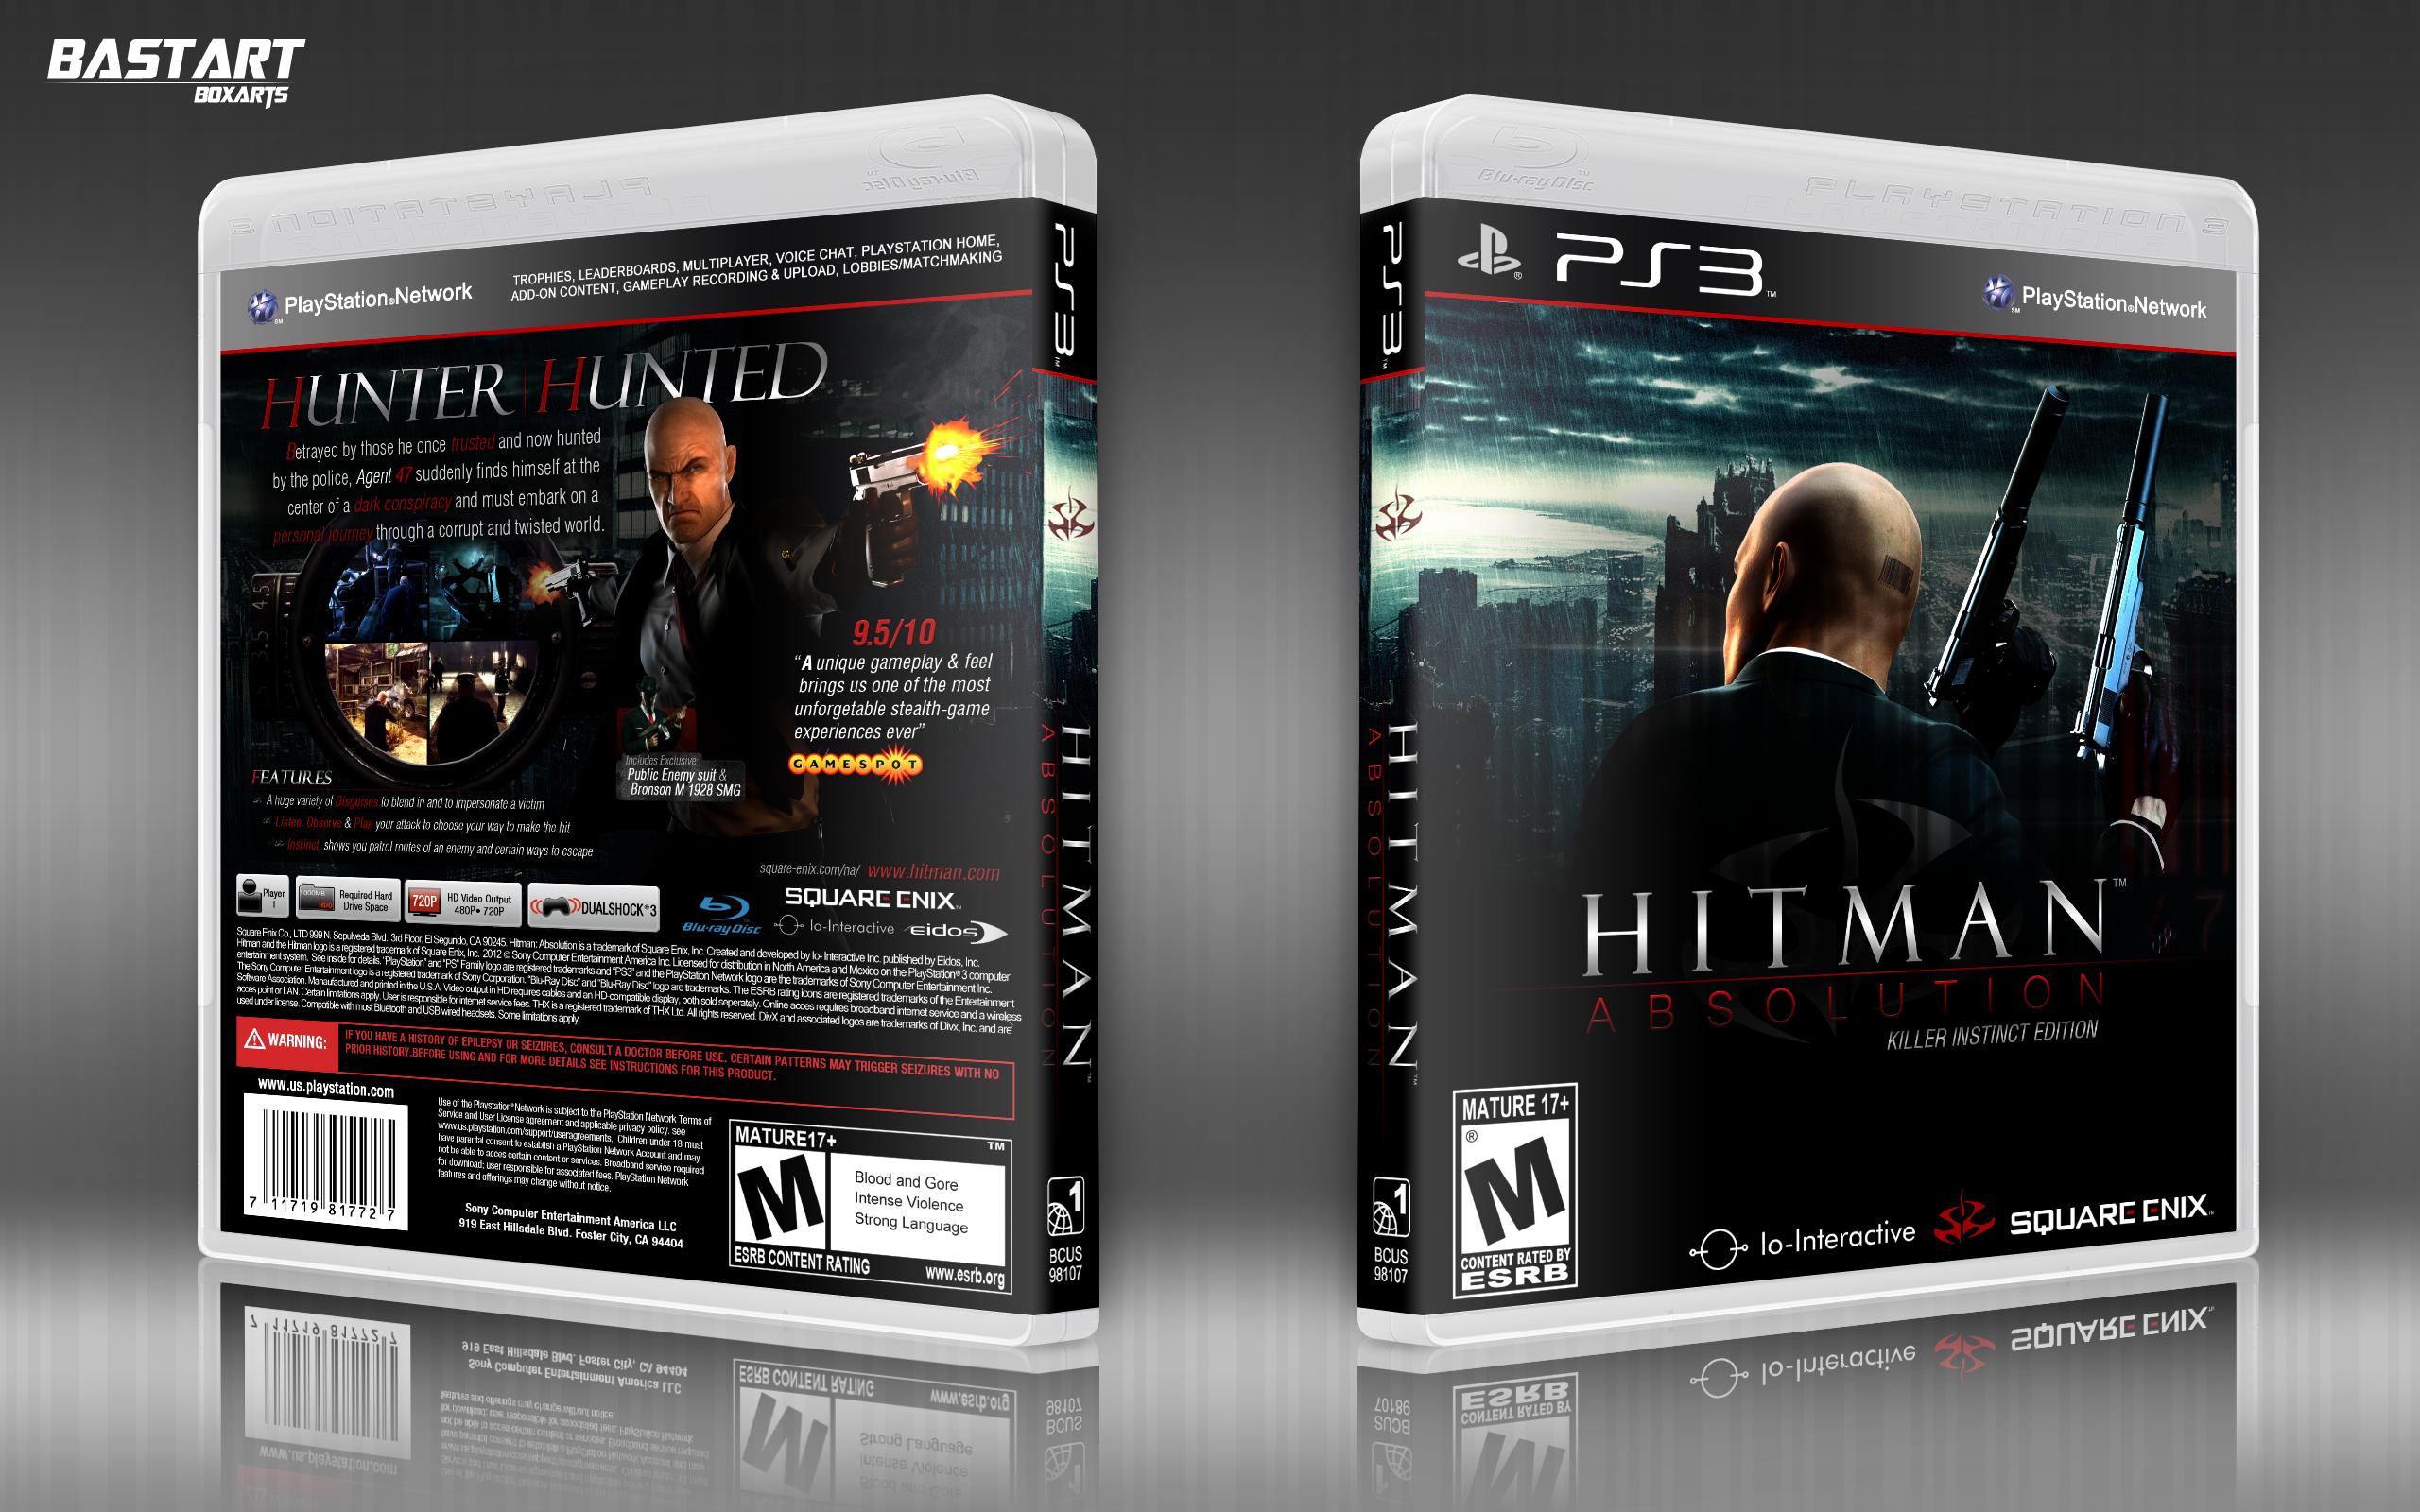 Hitman Absolution: Killer Instinct Edition box cover